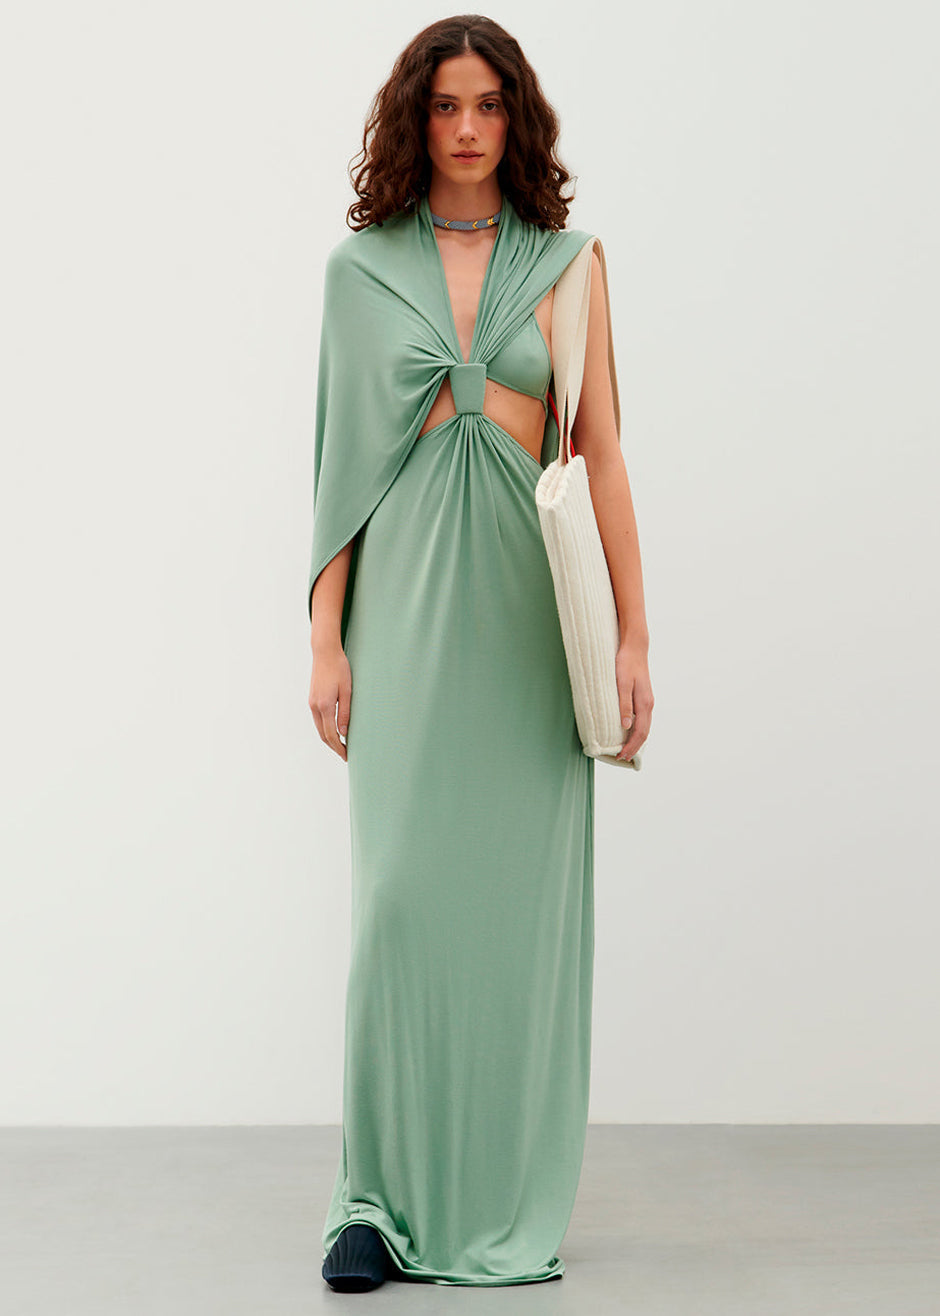 Bevza Cape and Sail Collar Dress - Mint Green - 1